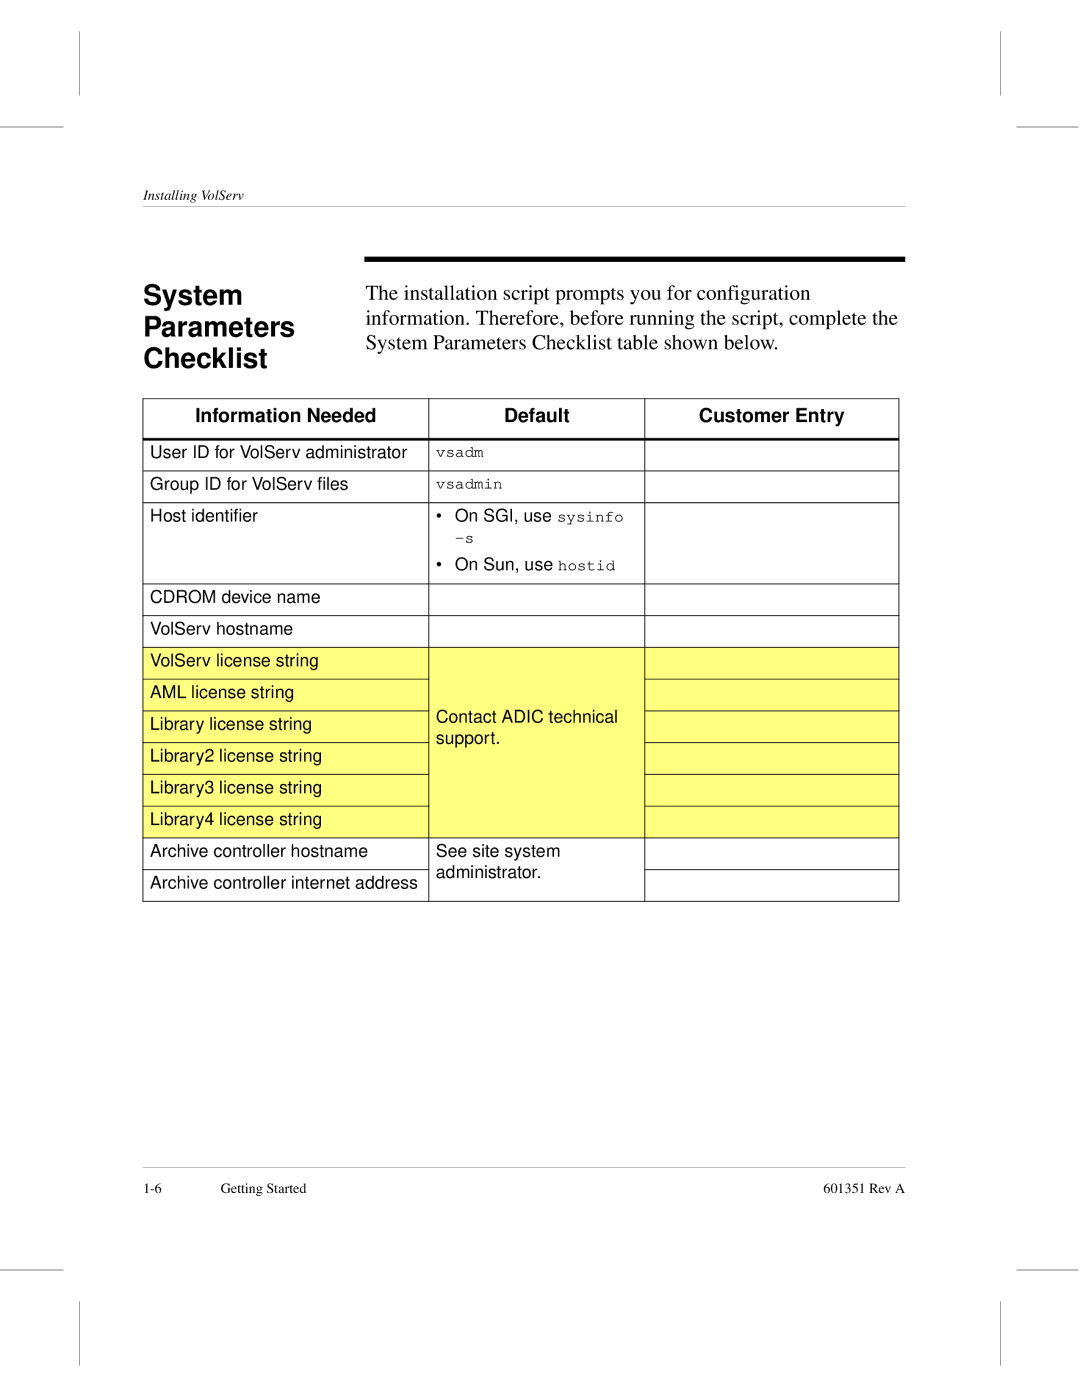 ADIC Version 5.0 manual System Parameters Checklist, Information Needed Default Customer Entry 